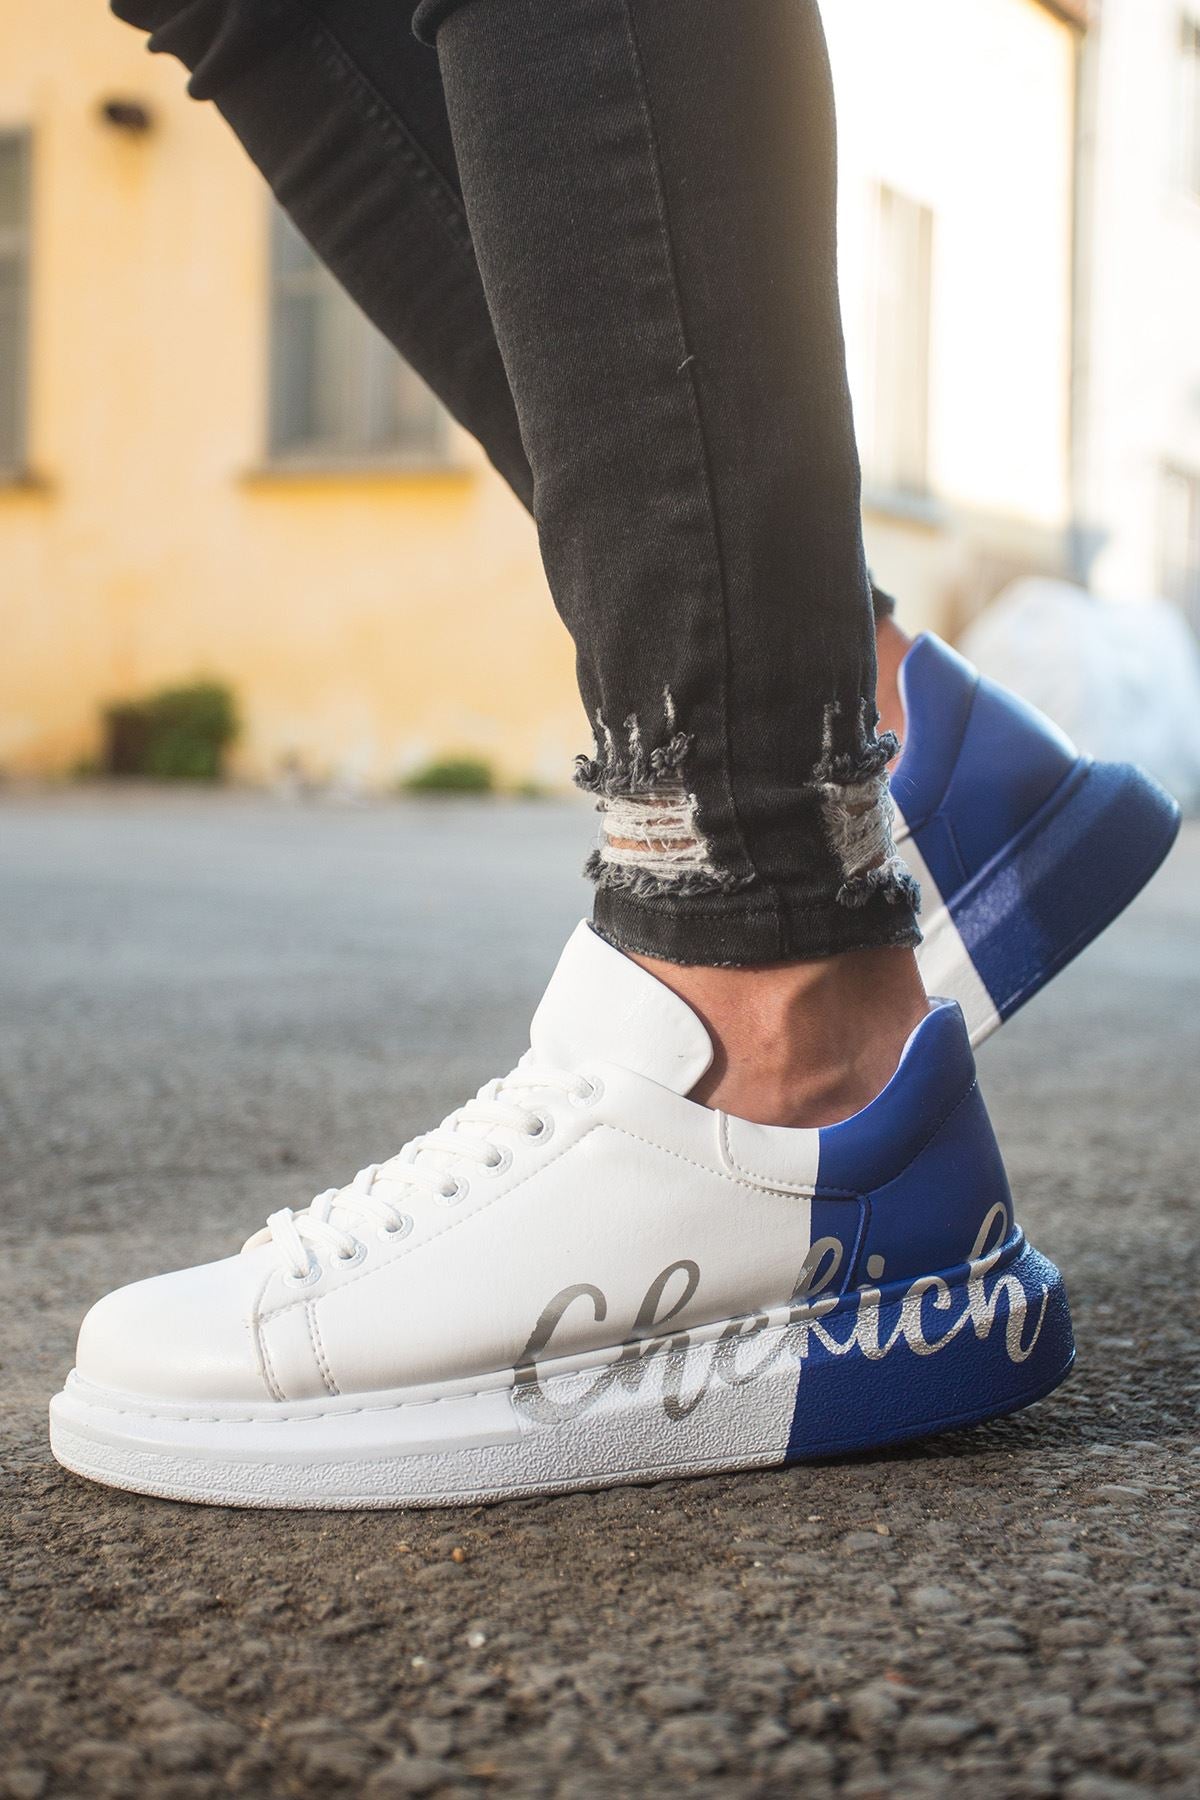 CH254 Men's Unisex White-Blue Casual Sneaker Sports Shoes - STREET MODE ™